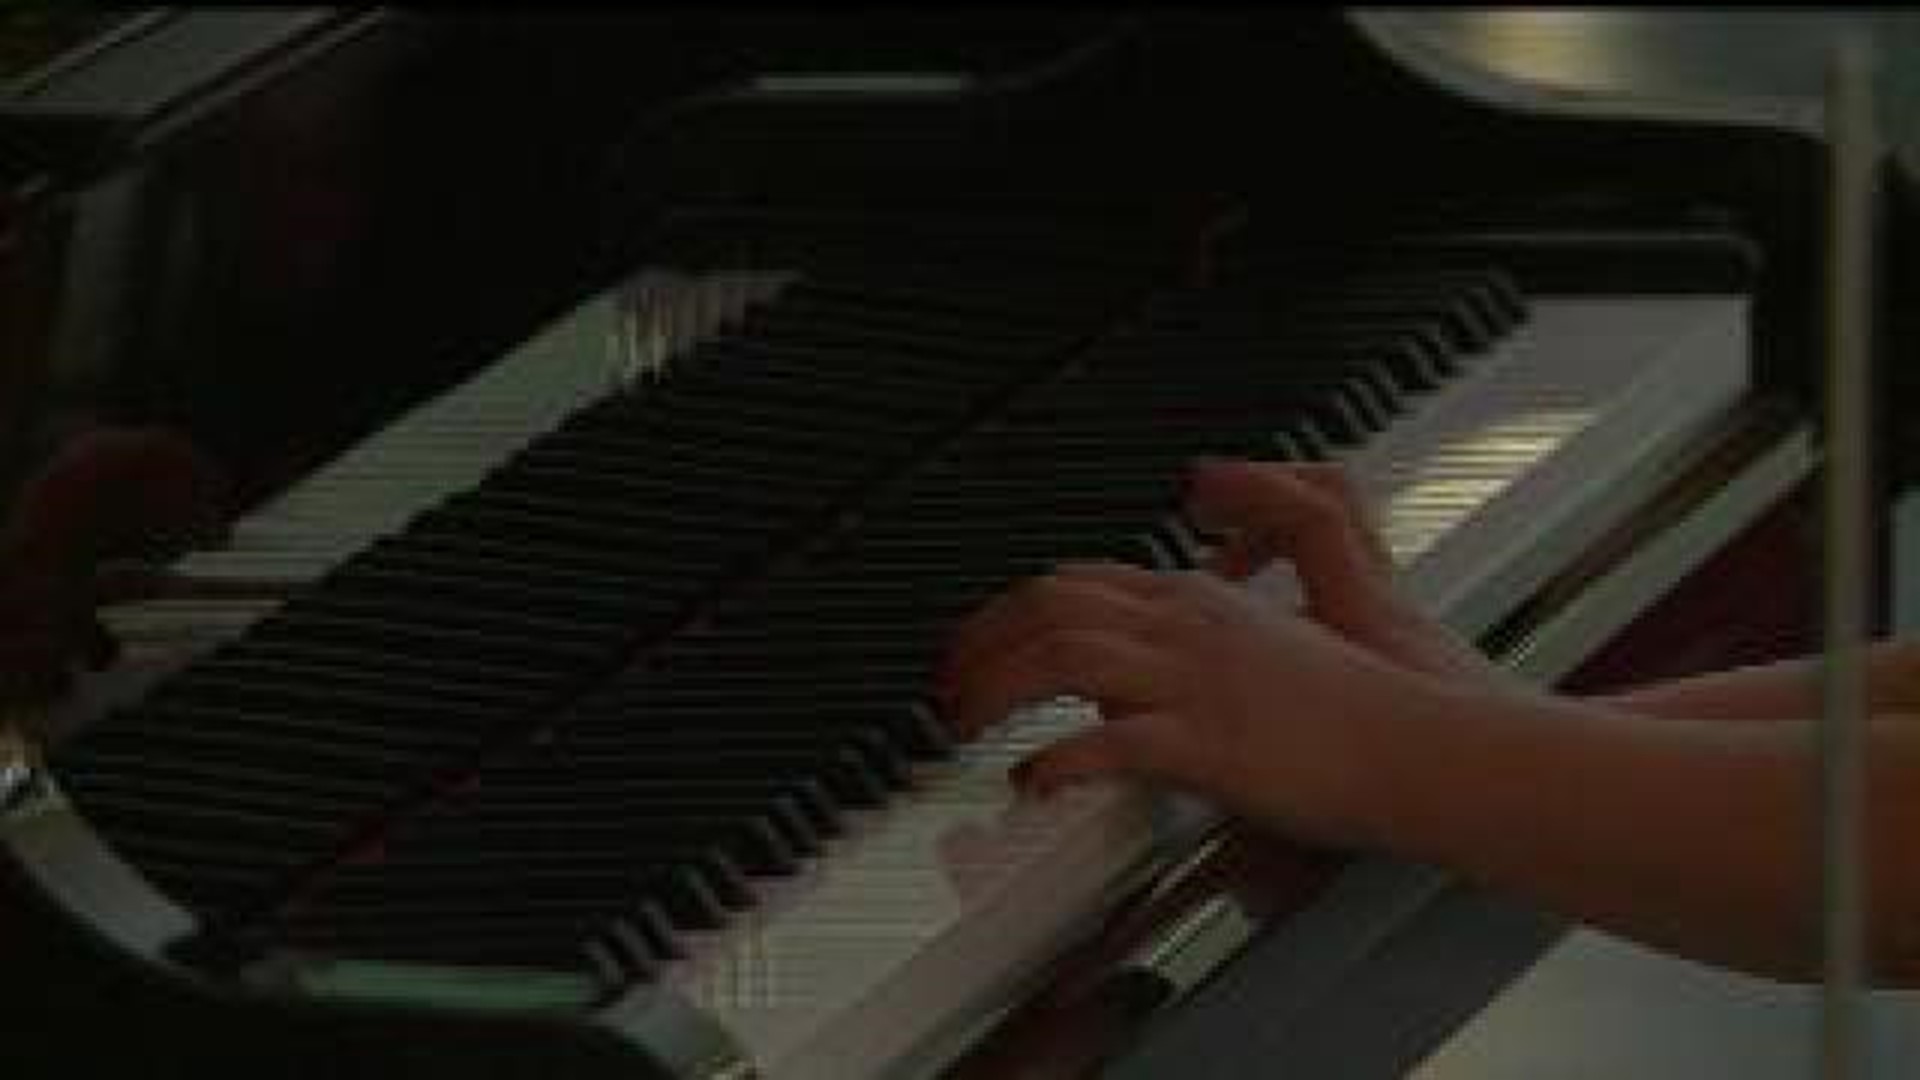 Kids help kids by playing piano